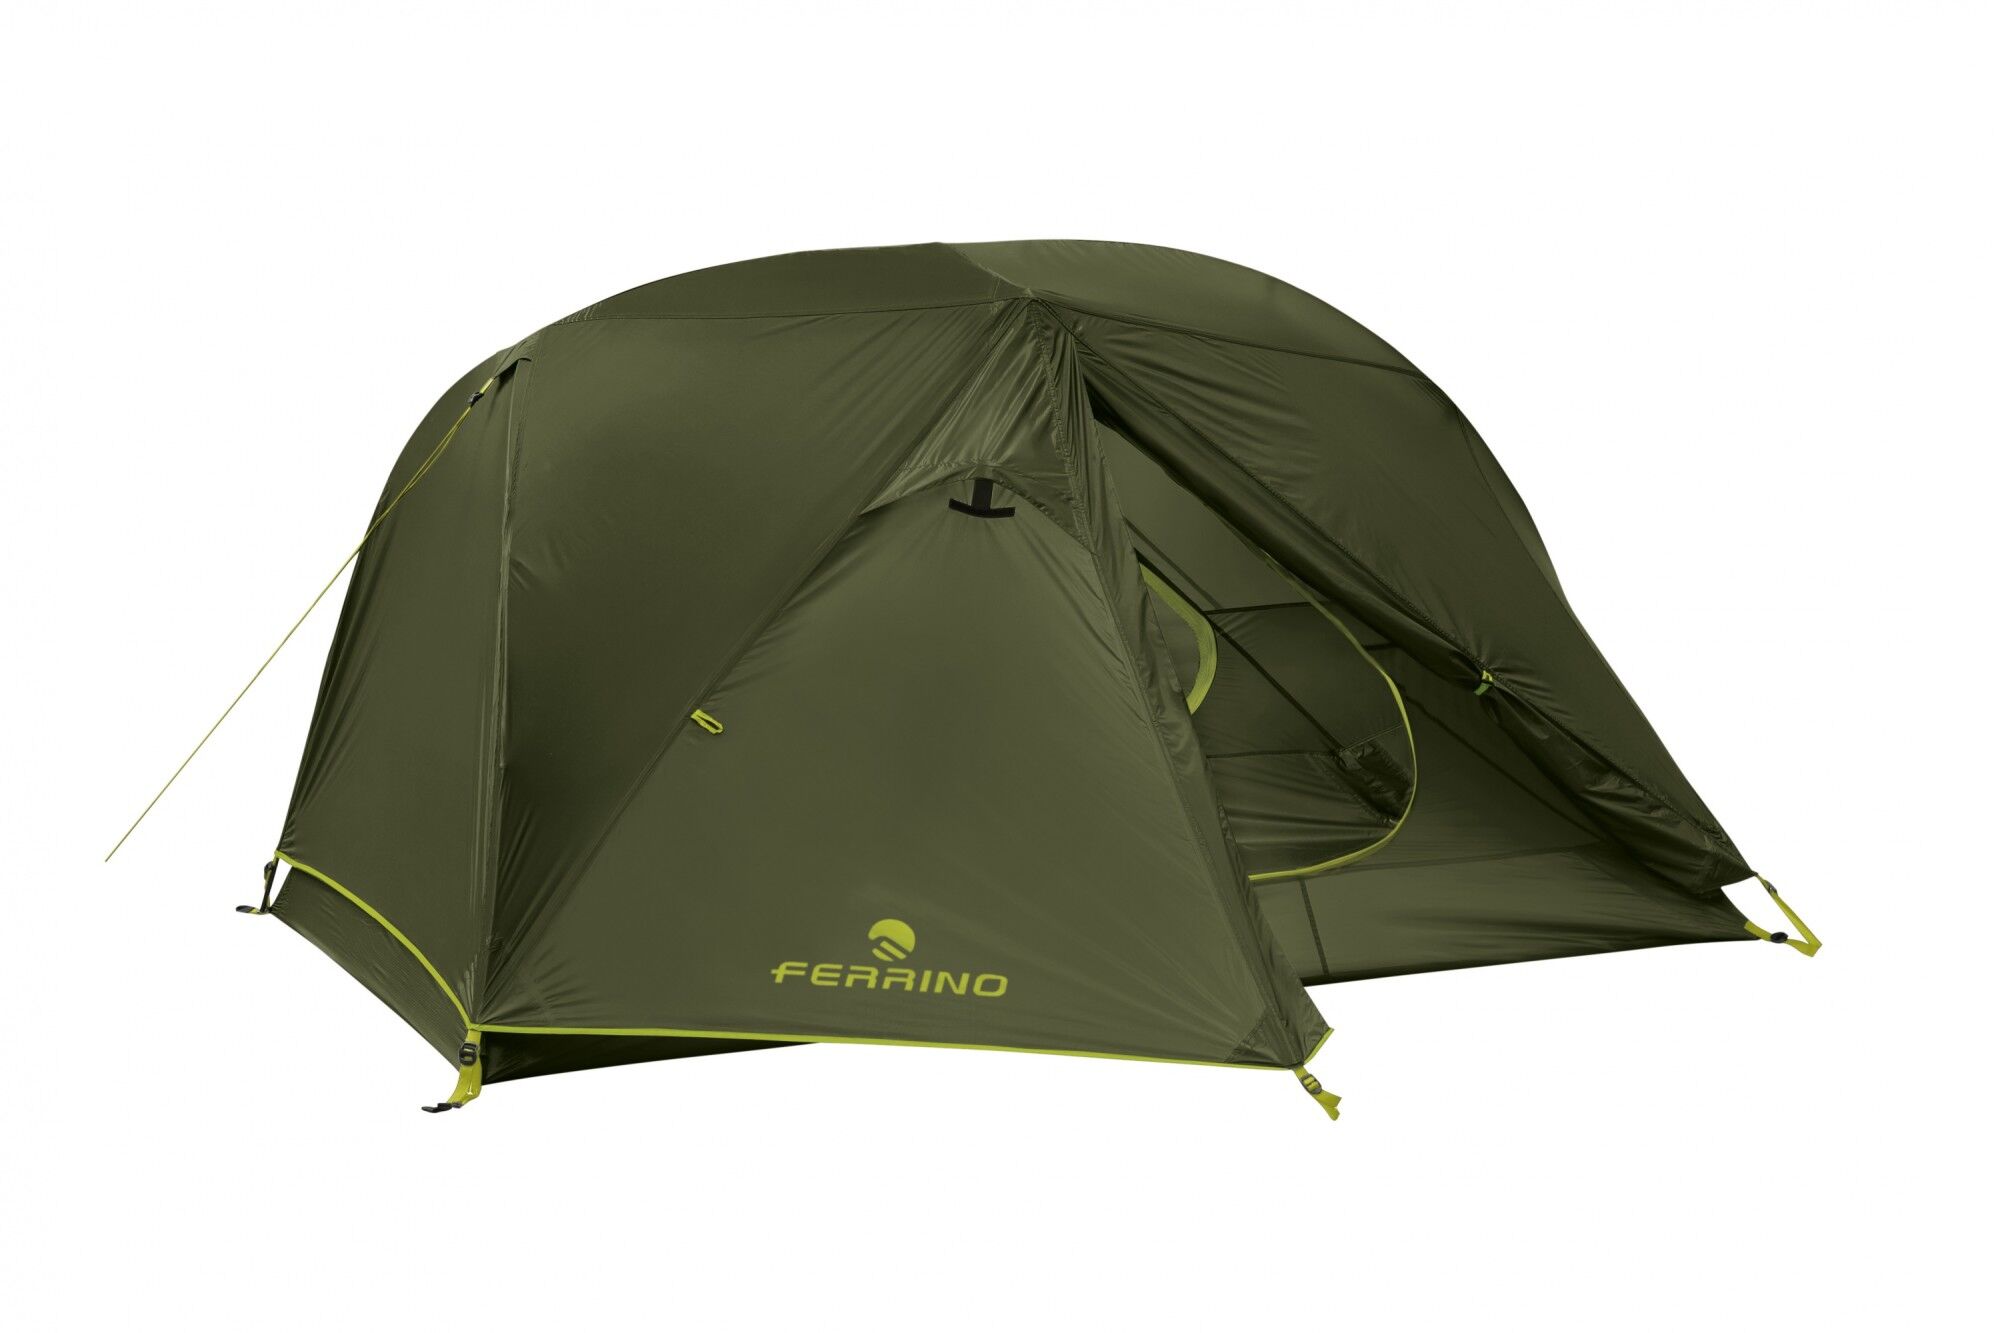 Ferrino Atrax 2 - Tent